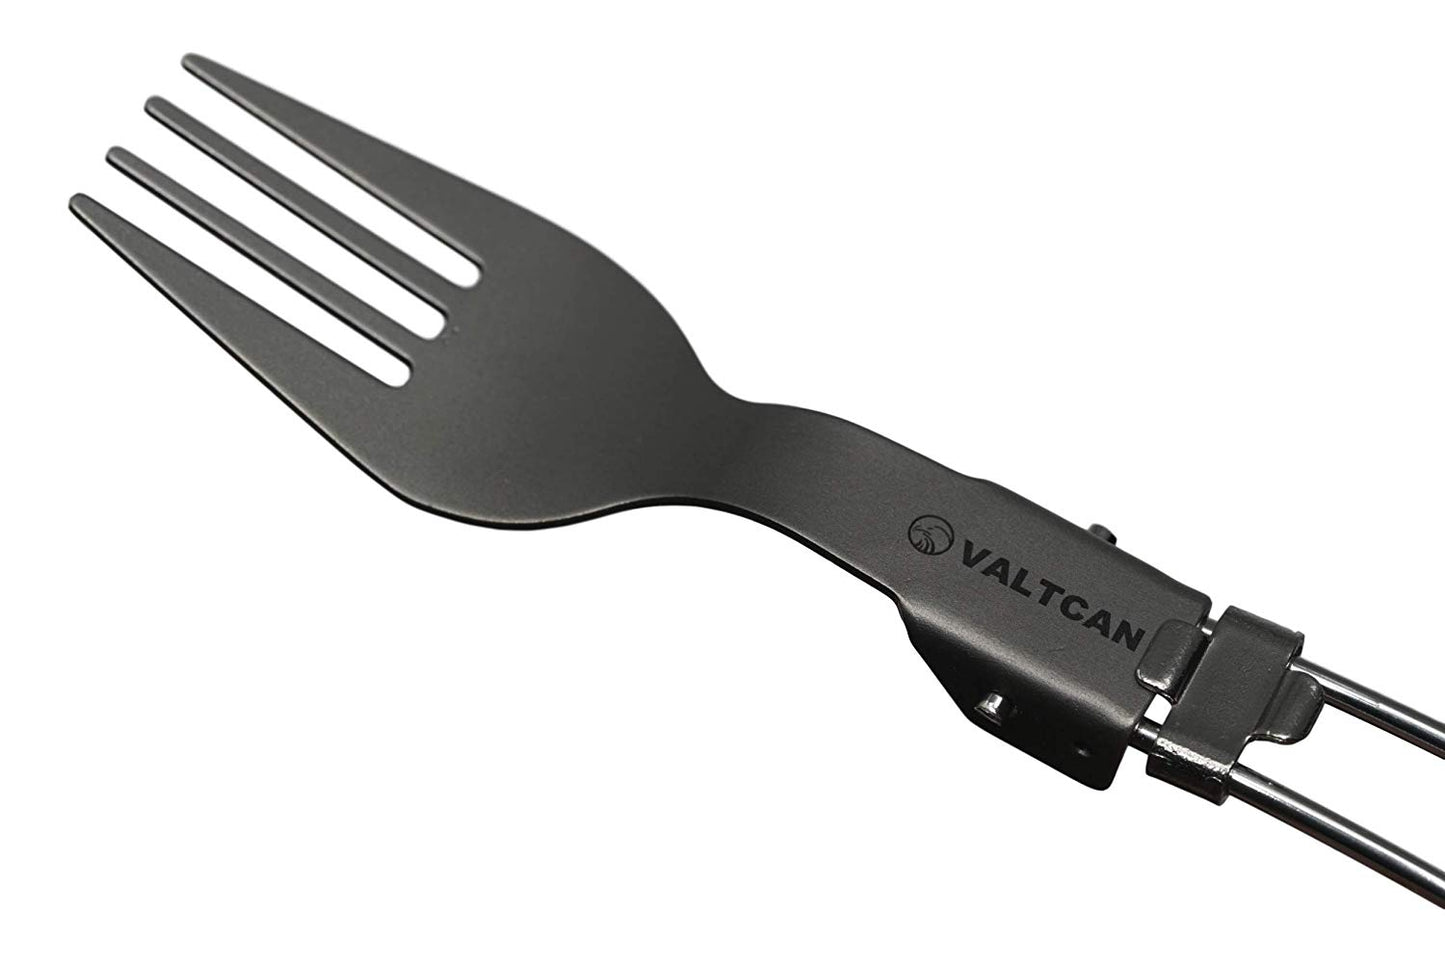 Valtcan Titanium EDC Folding Cutlery 3 Piece Utensil Set 58g